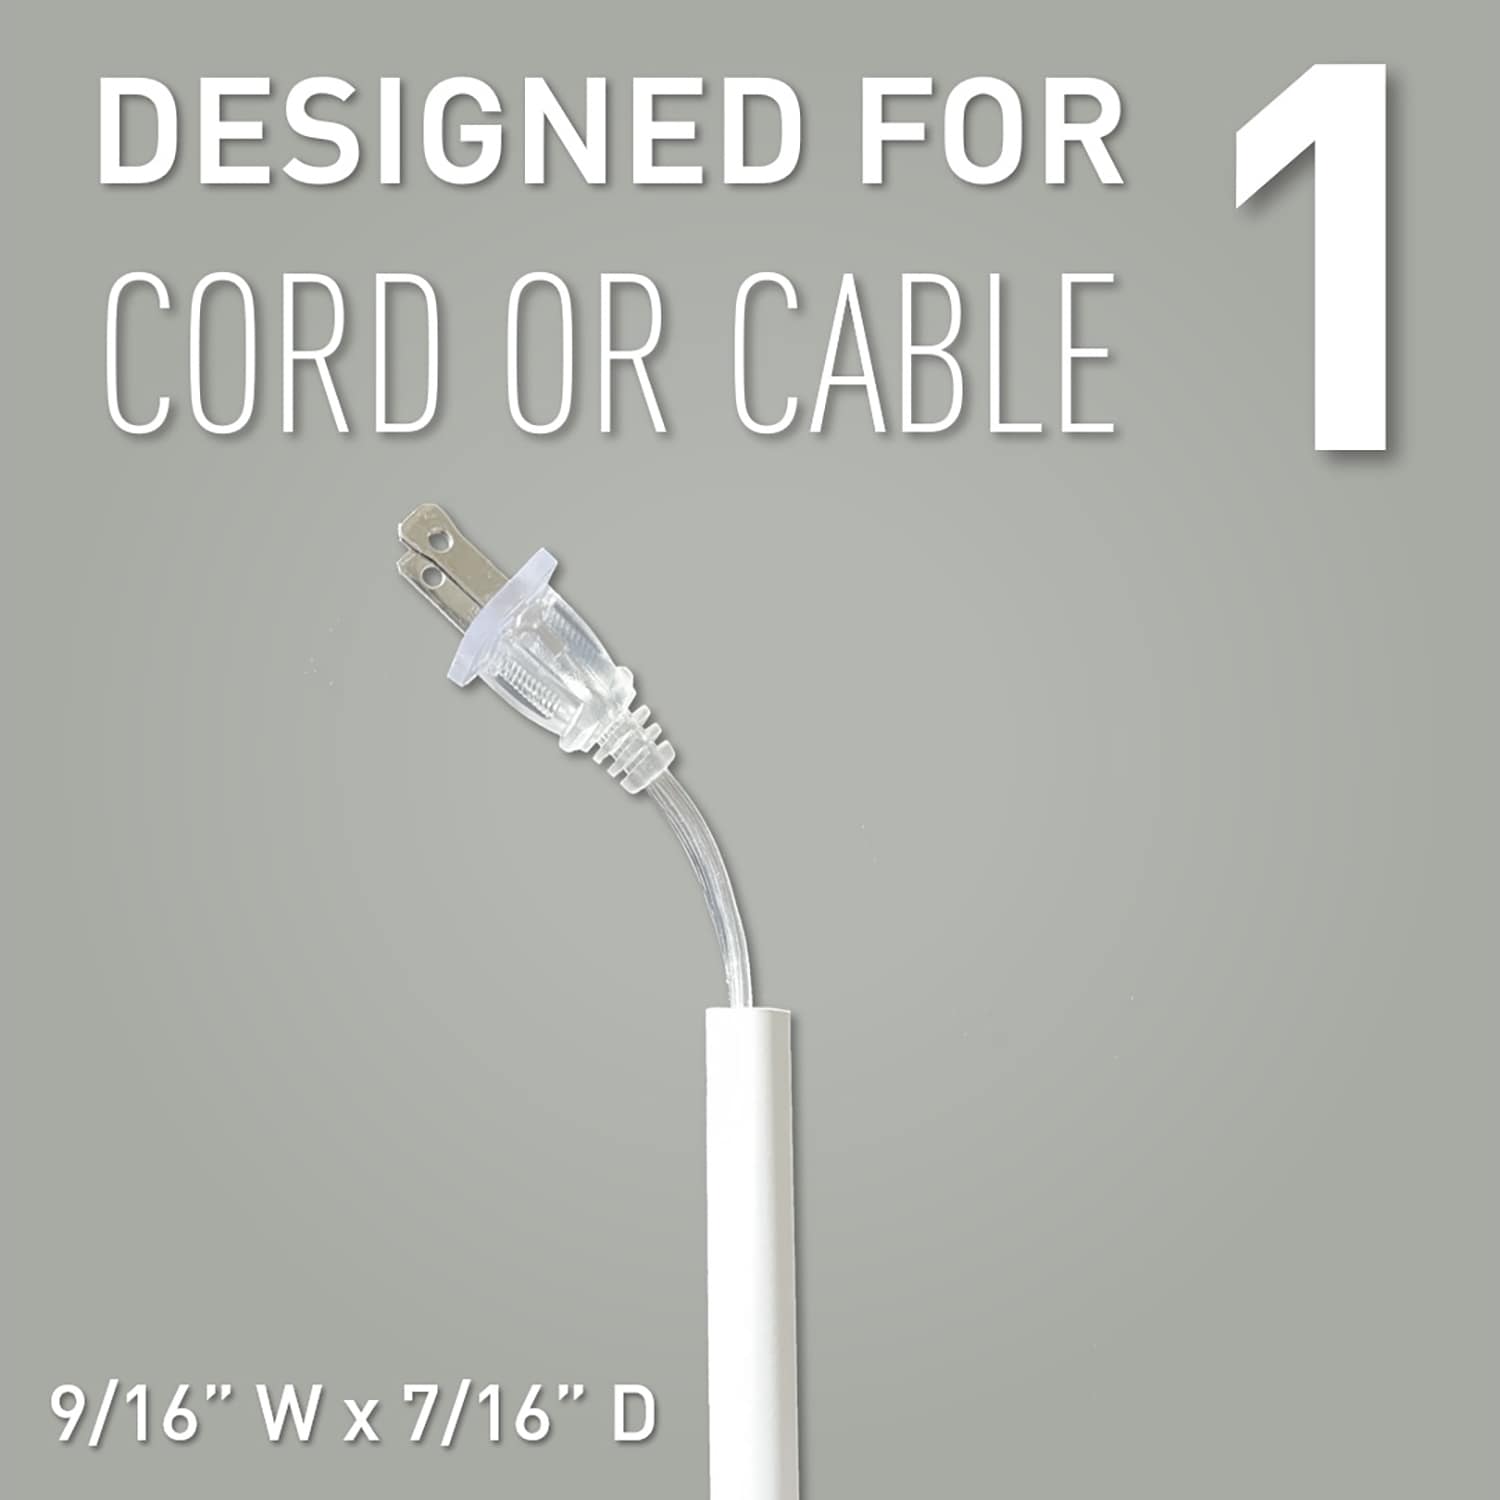 Legrand - Wiremold C210s Cord Cover Kit White